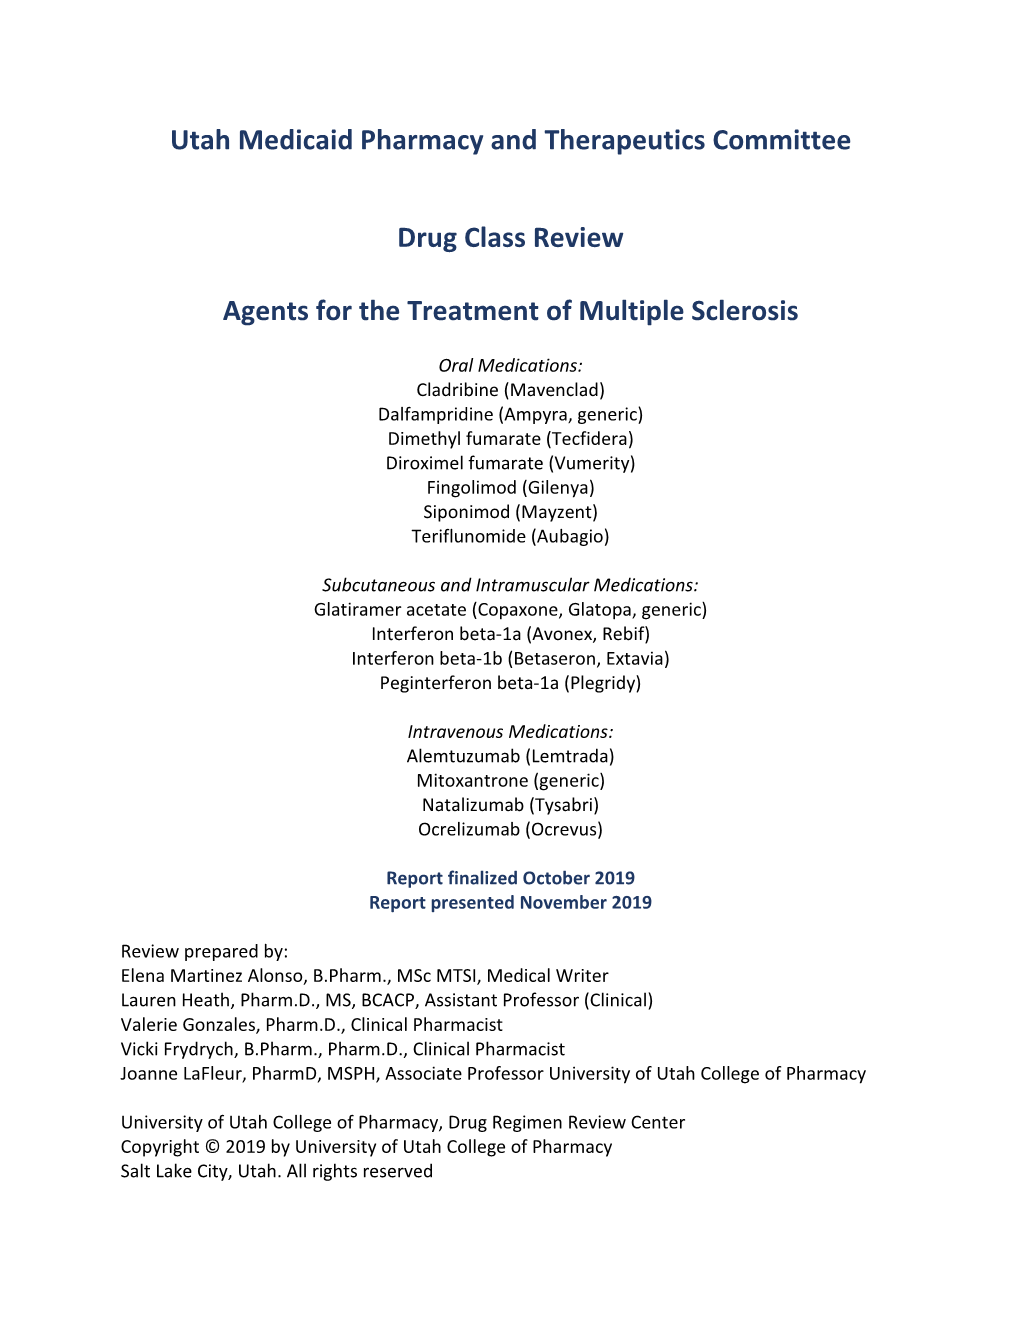 Utah Medicaid Pharmacy and Therapeutics Committee Drug